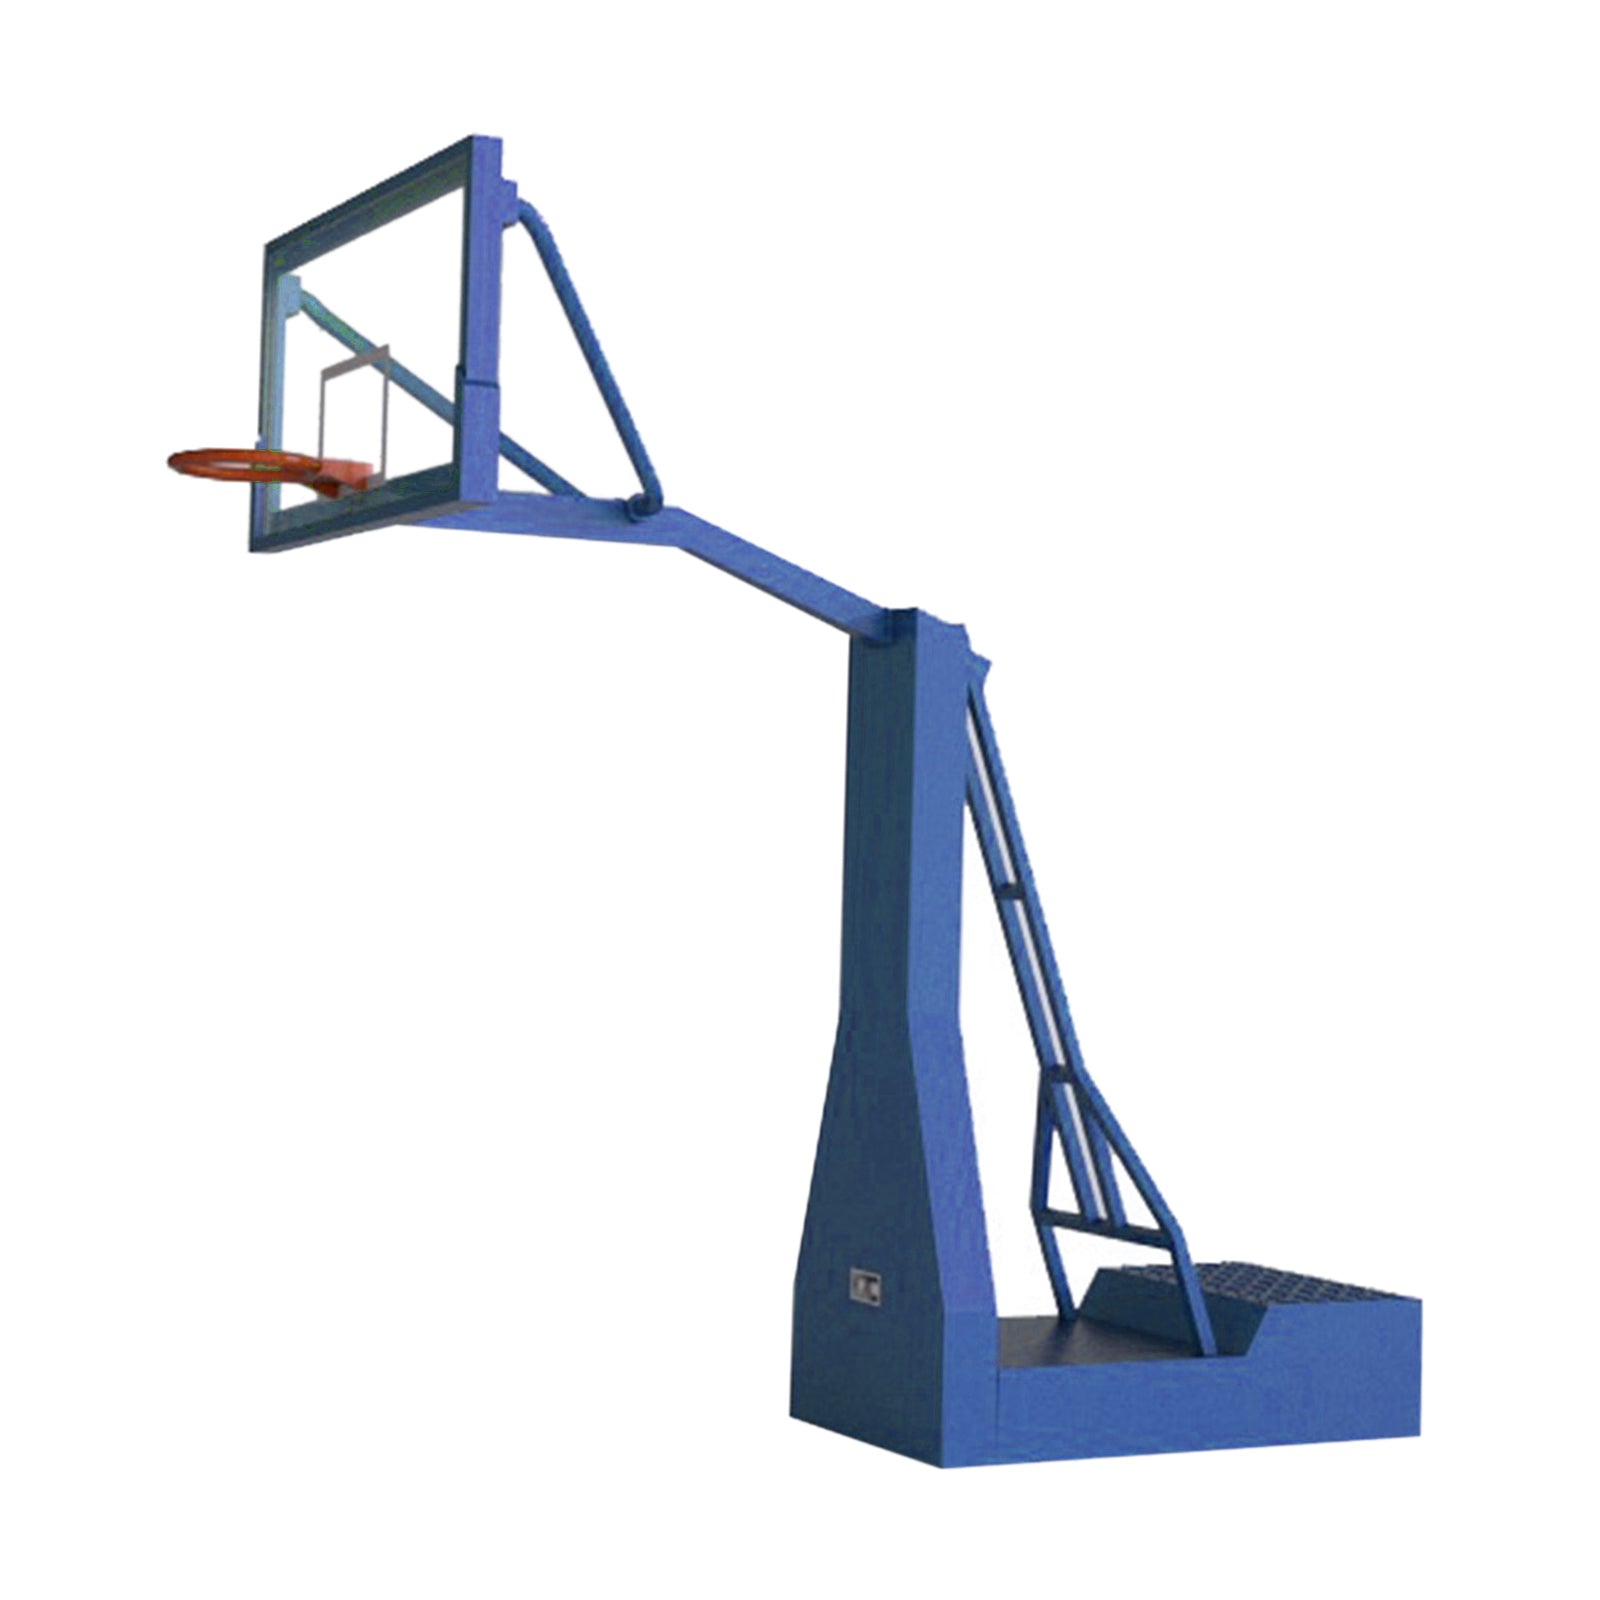 1/32 Plastic Basketball Hoop Model for Action Figures Scene Props Blue